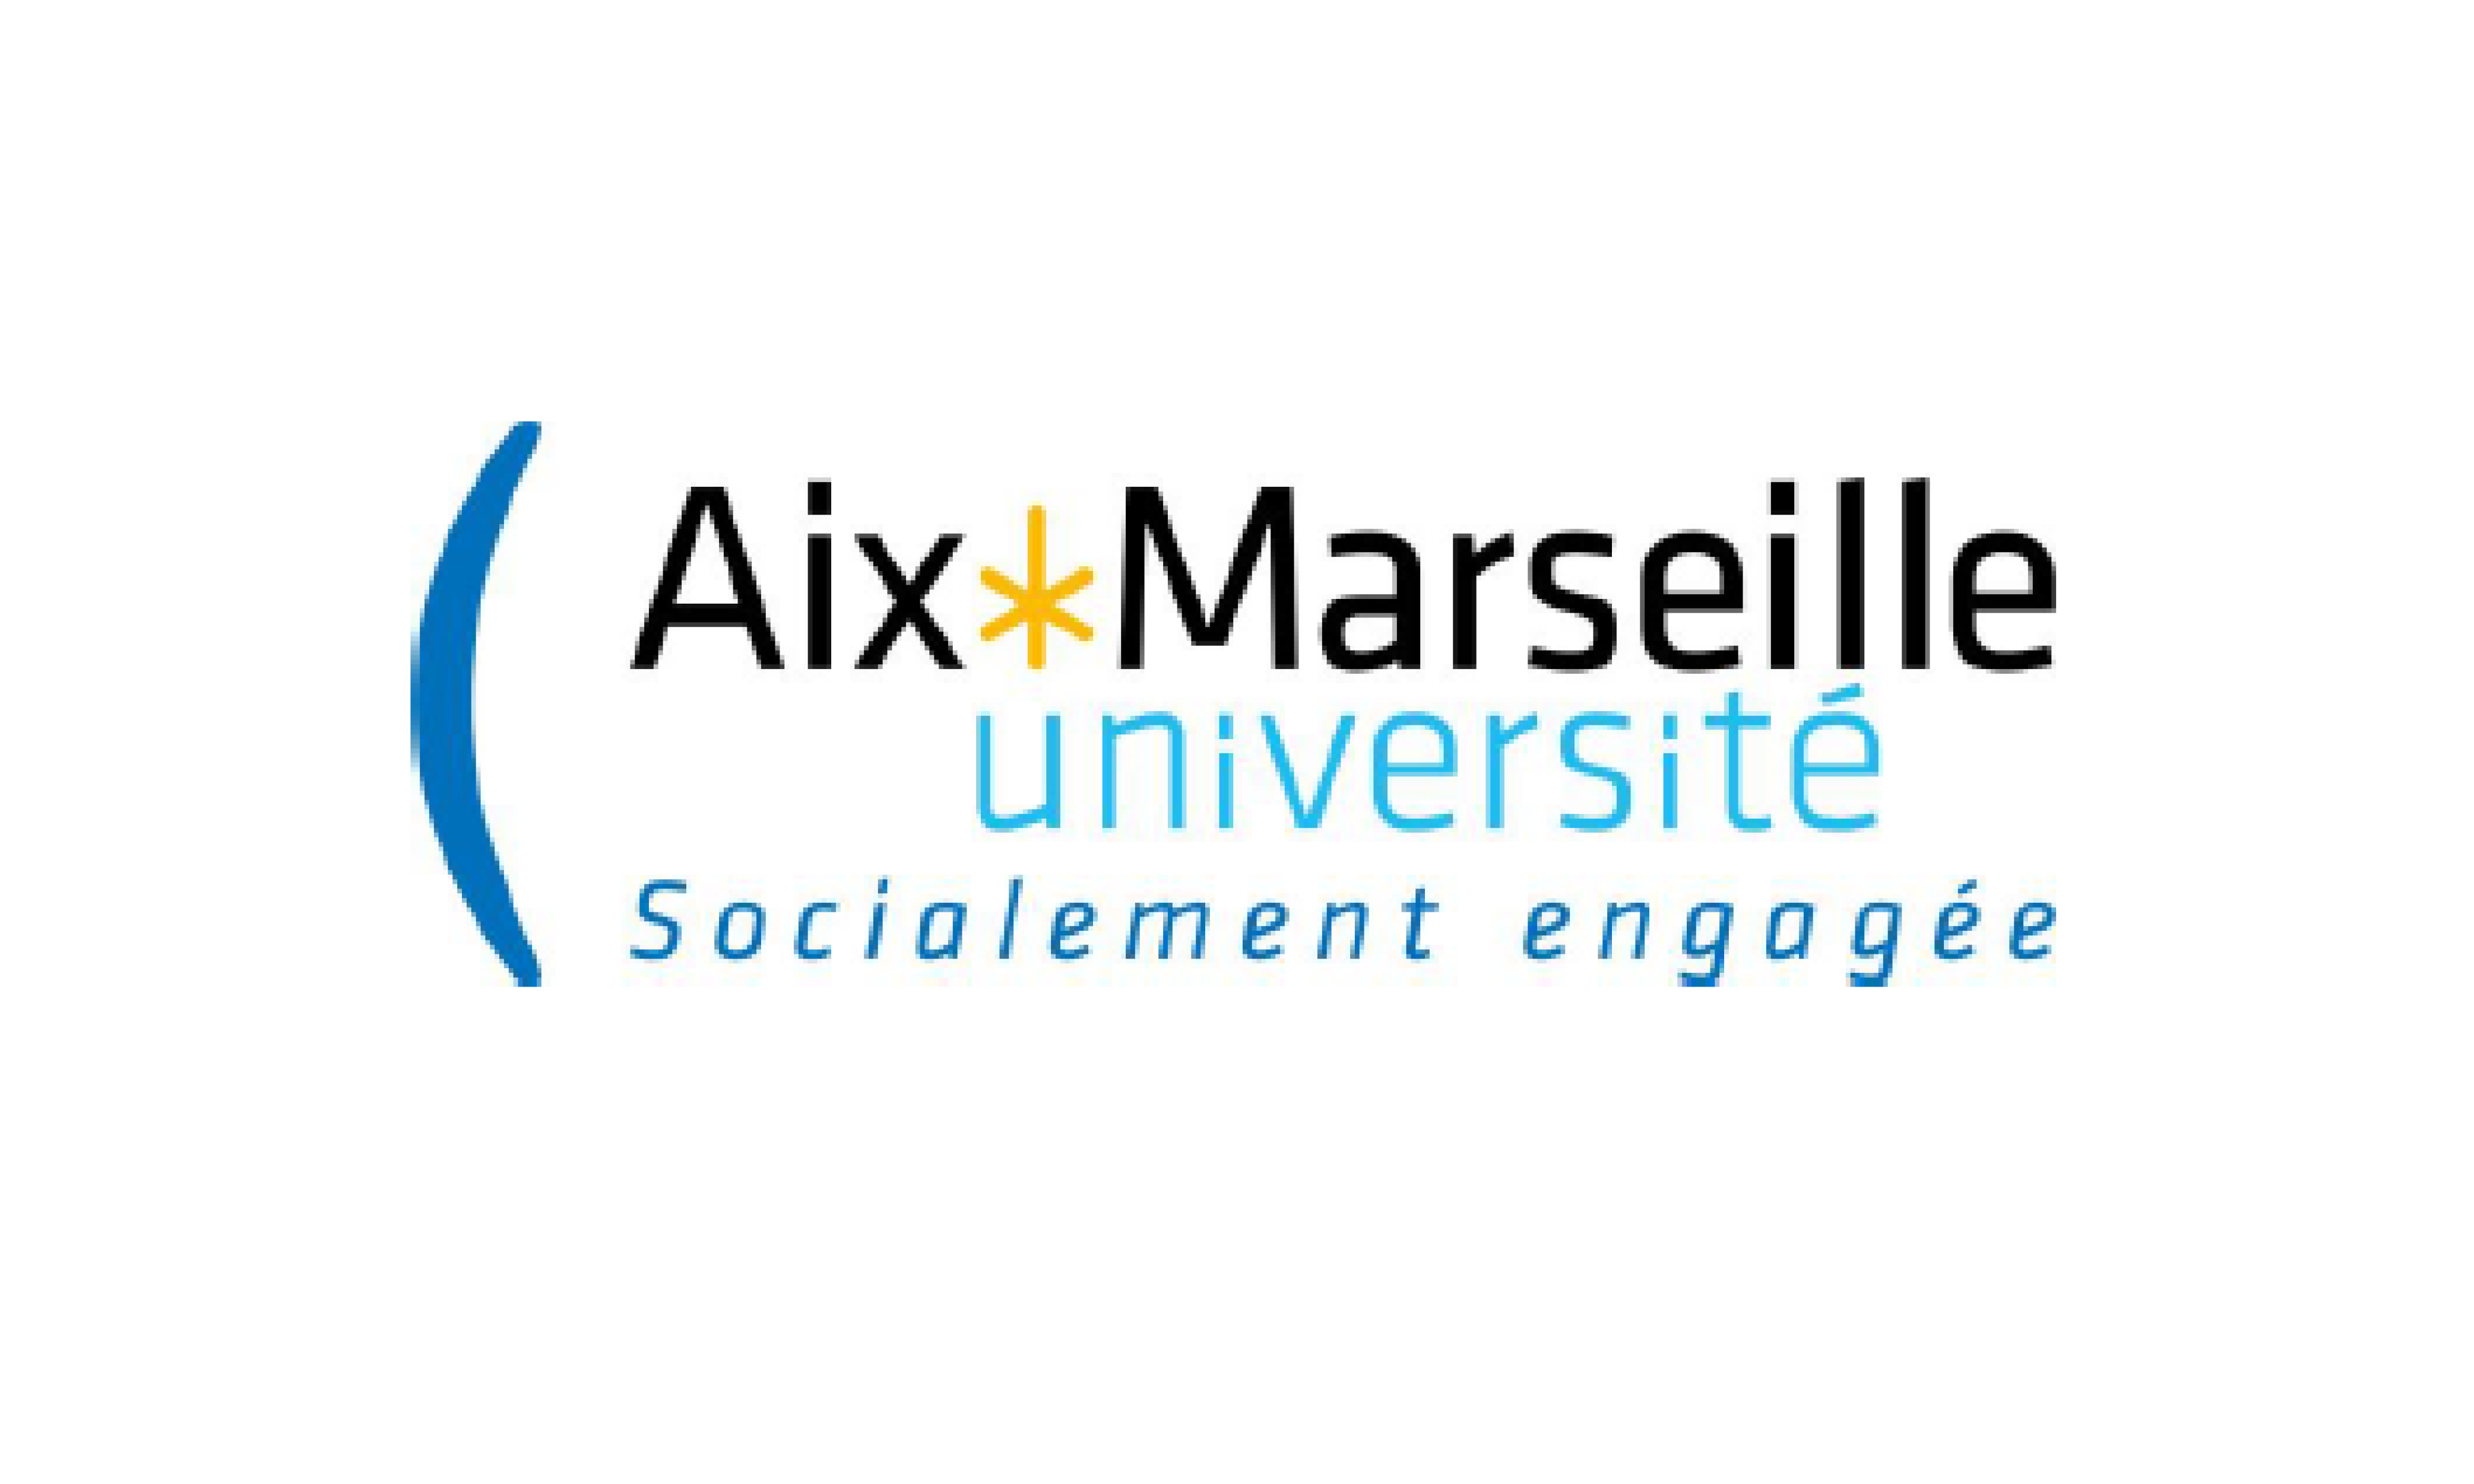 Aix Marseille University